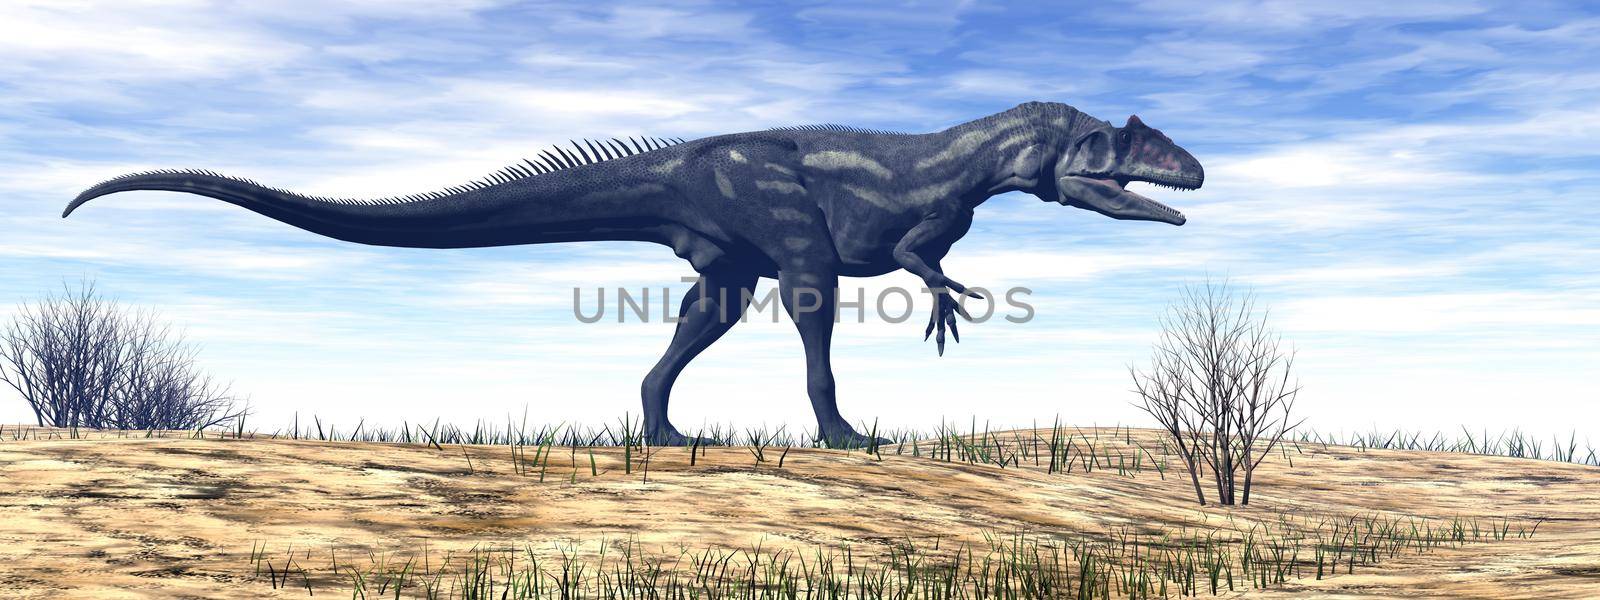 Allosaurus dinosaur in the desert - 3D render by Elenaphotos21